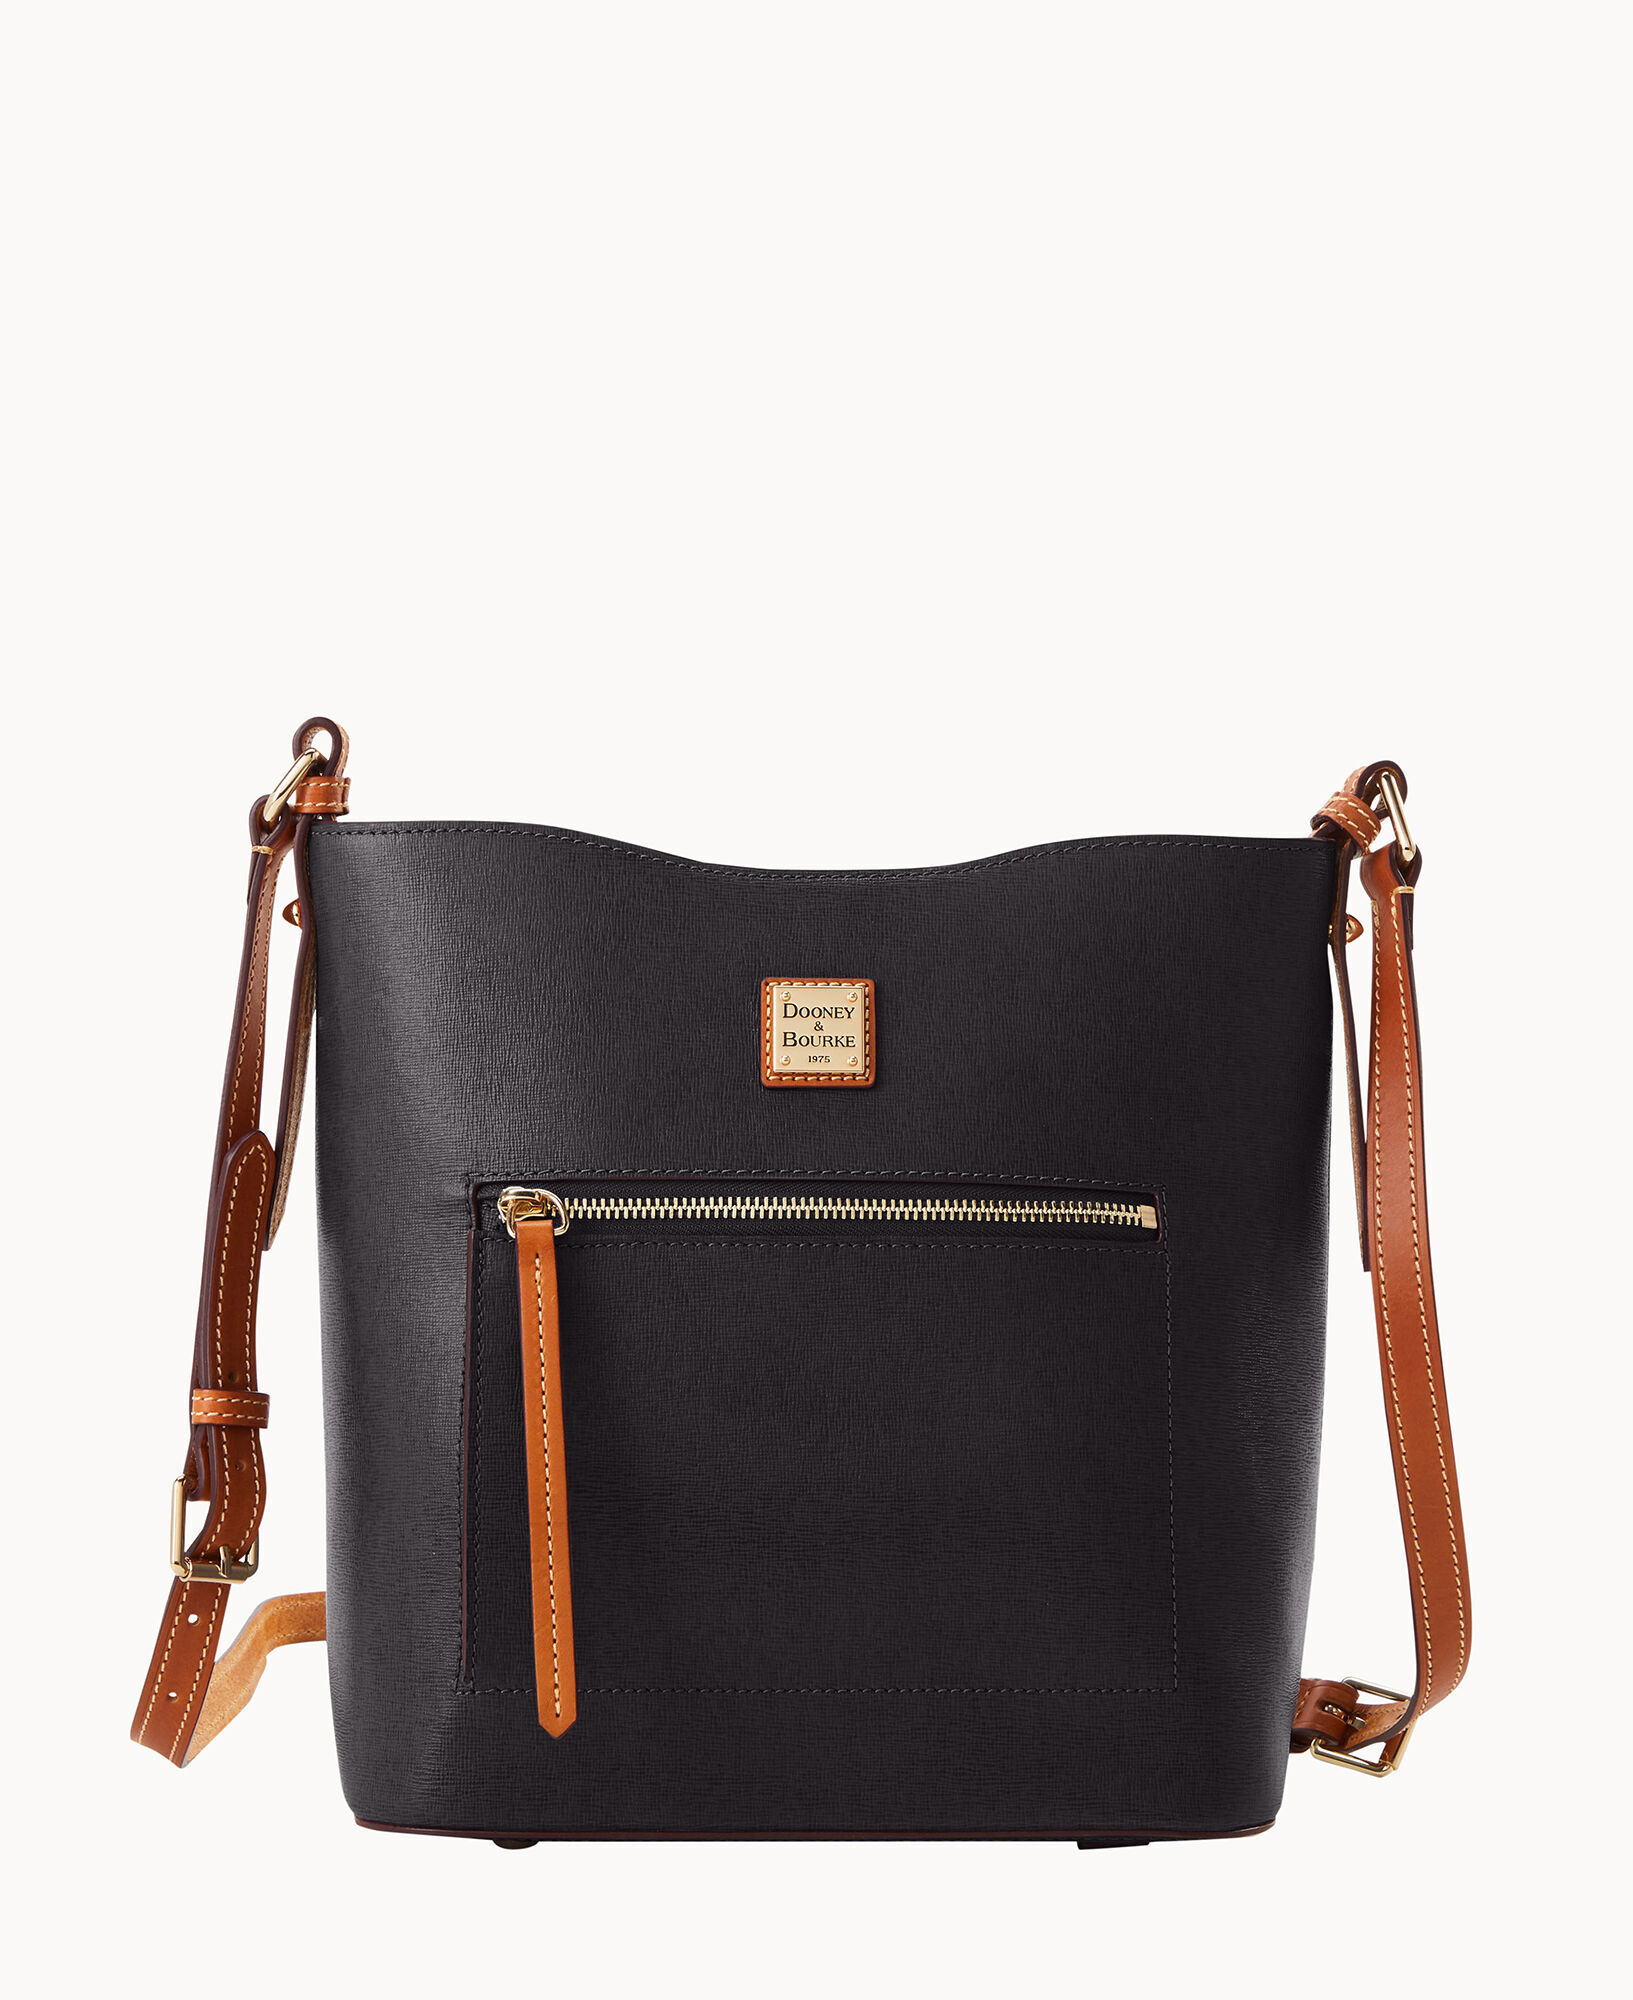 Dooney & Bourke Saffiano Shoulder Bag